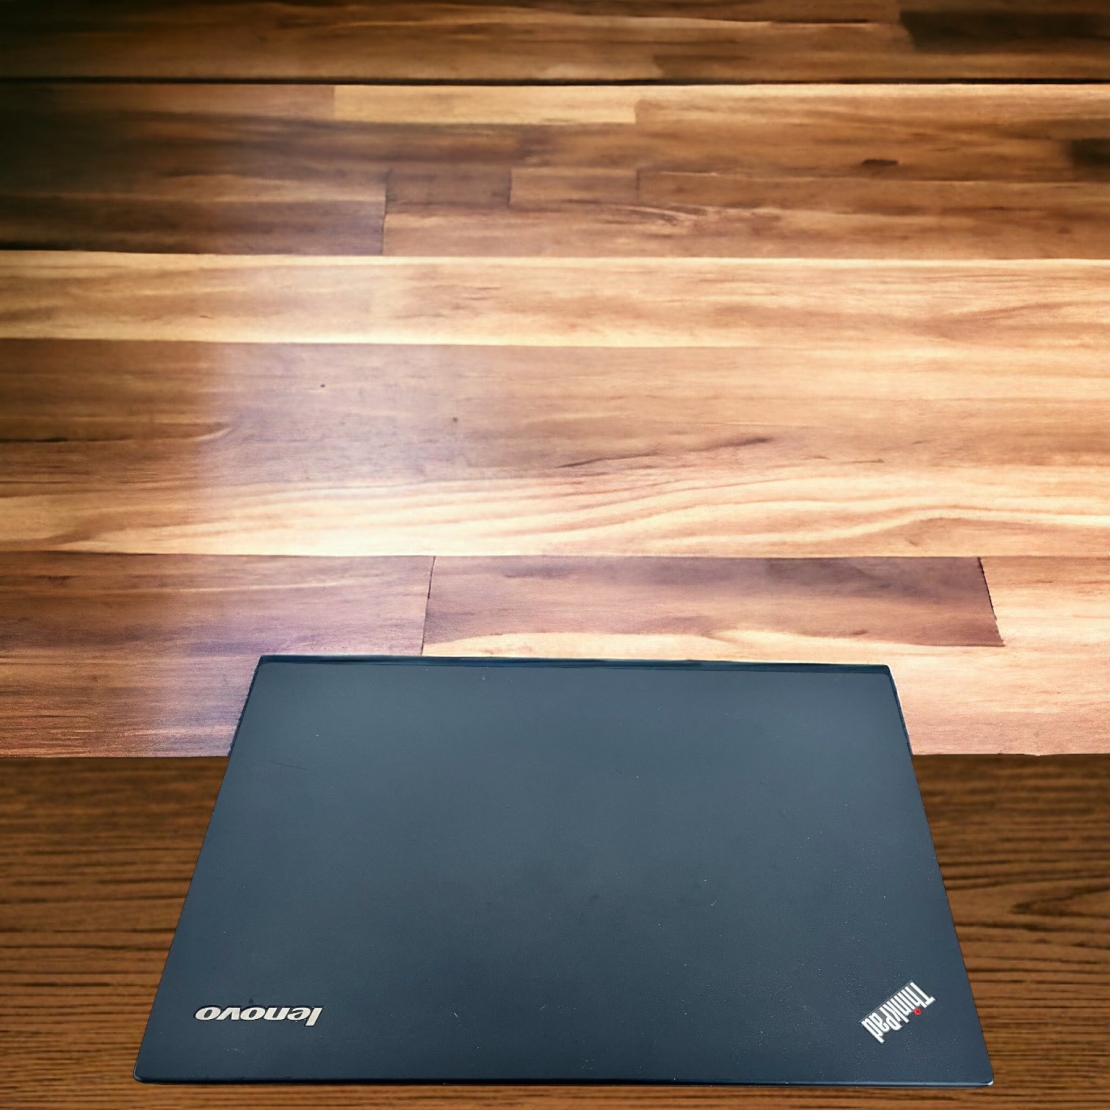 Лаптоп Lenovo ThinkPad T450